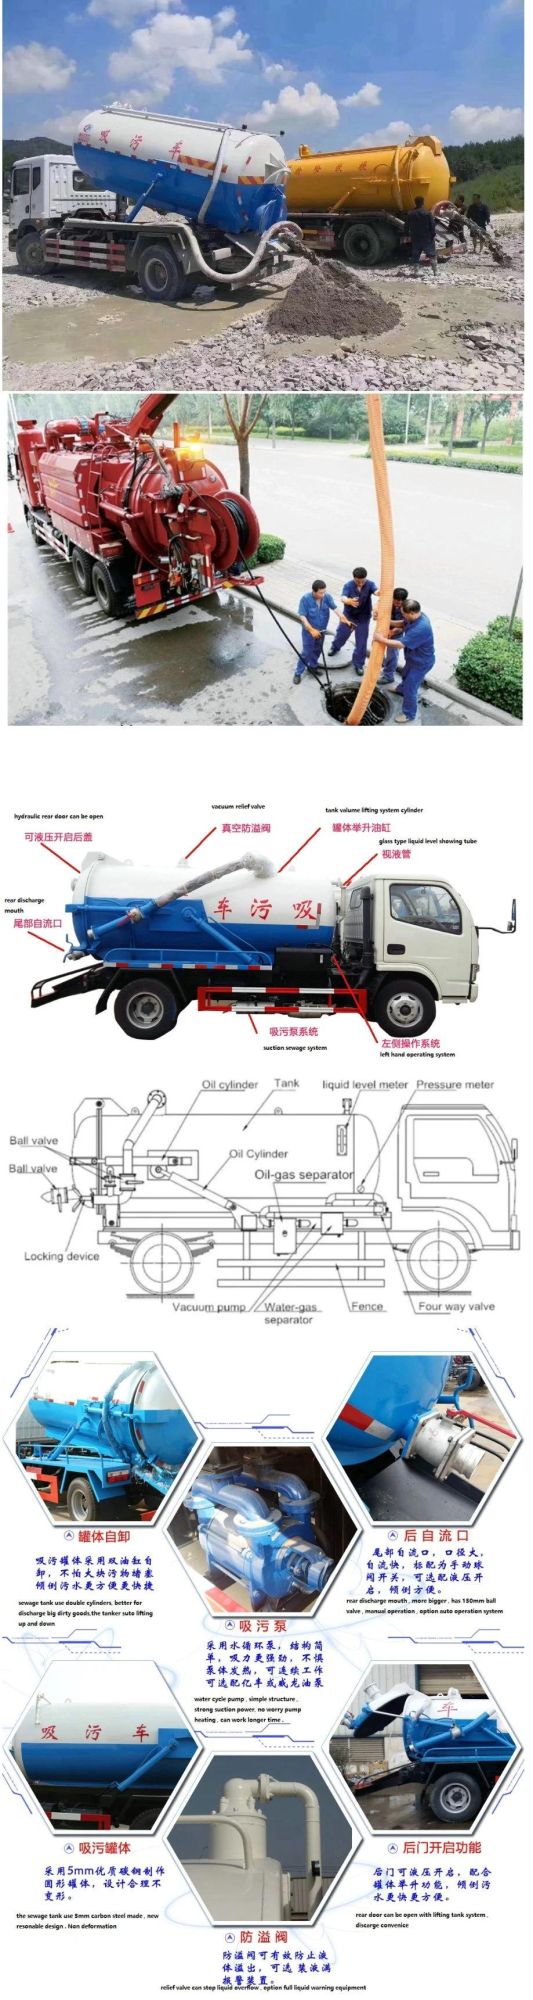 North Benz 6X6 Sewage Vacuum Truck / Septic / Tanker Truck 16cbm.